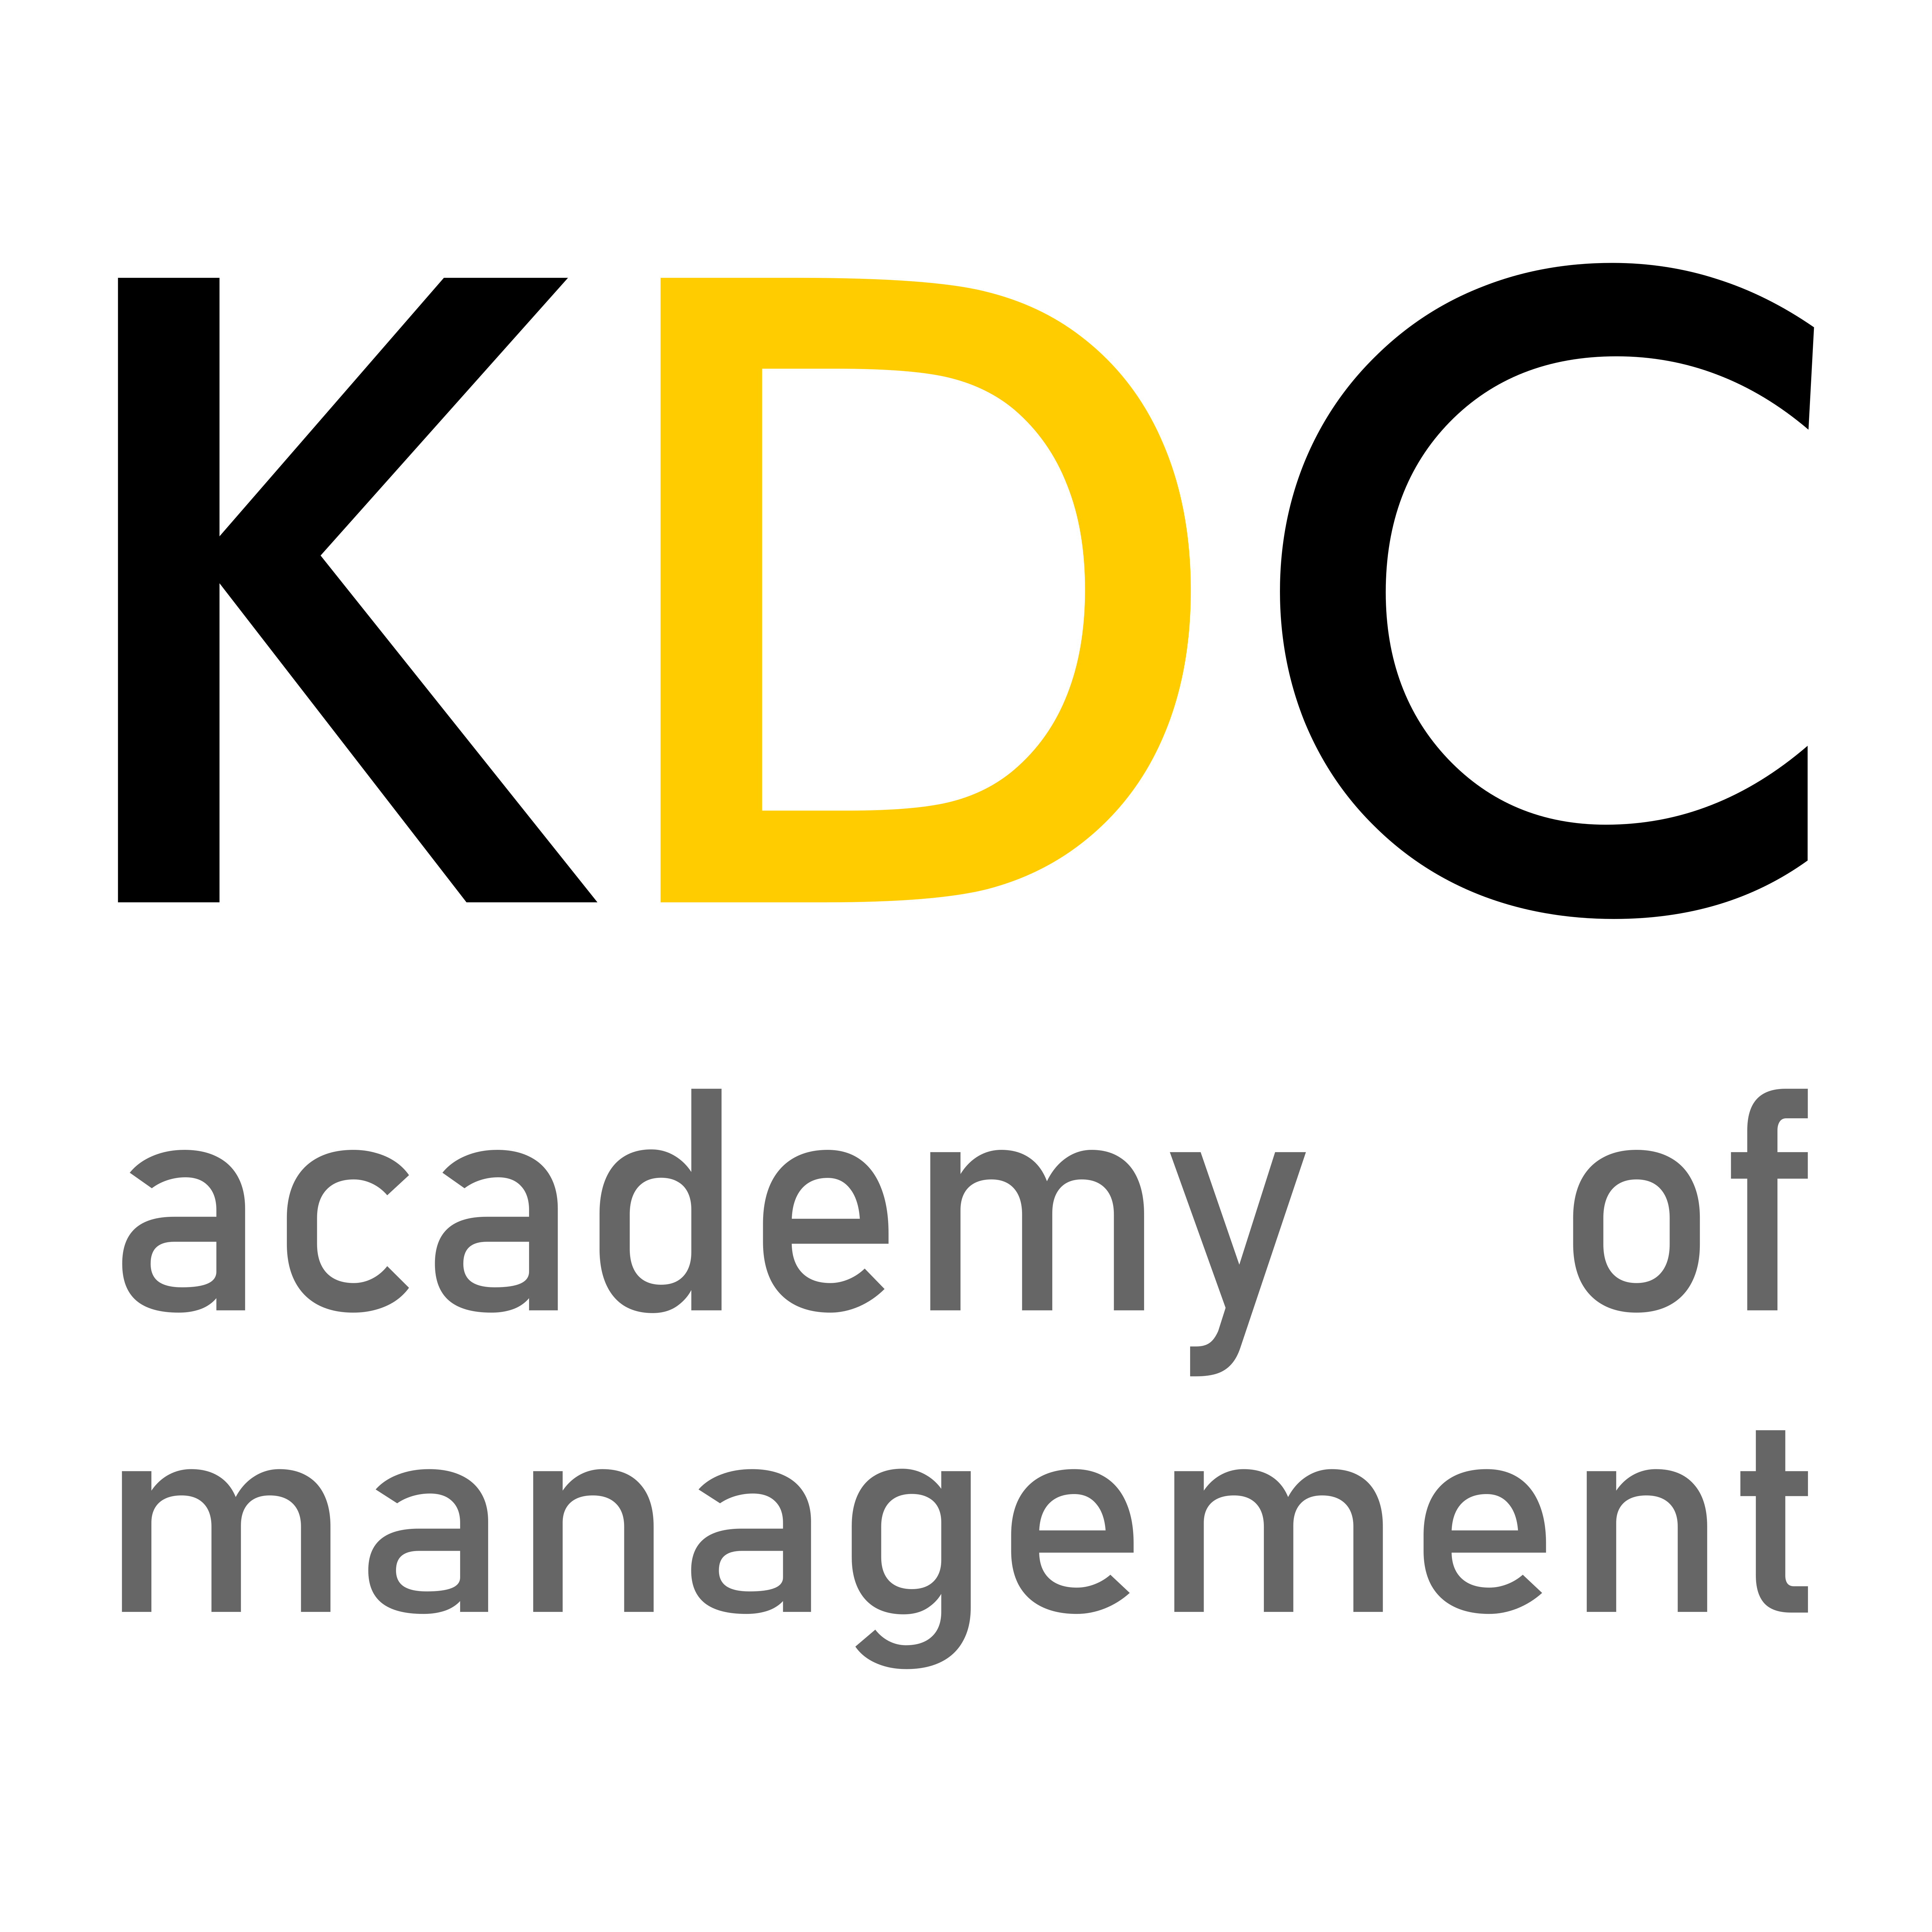 KDC Academy of Management